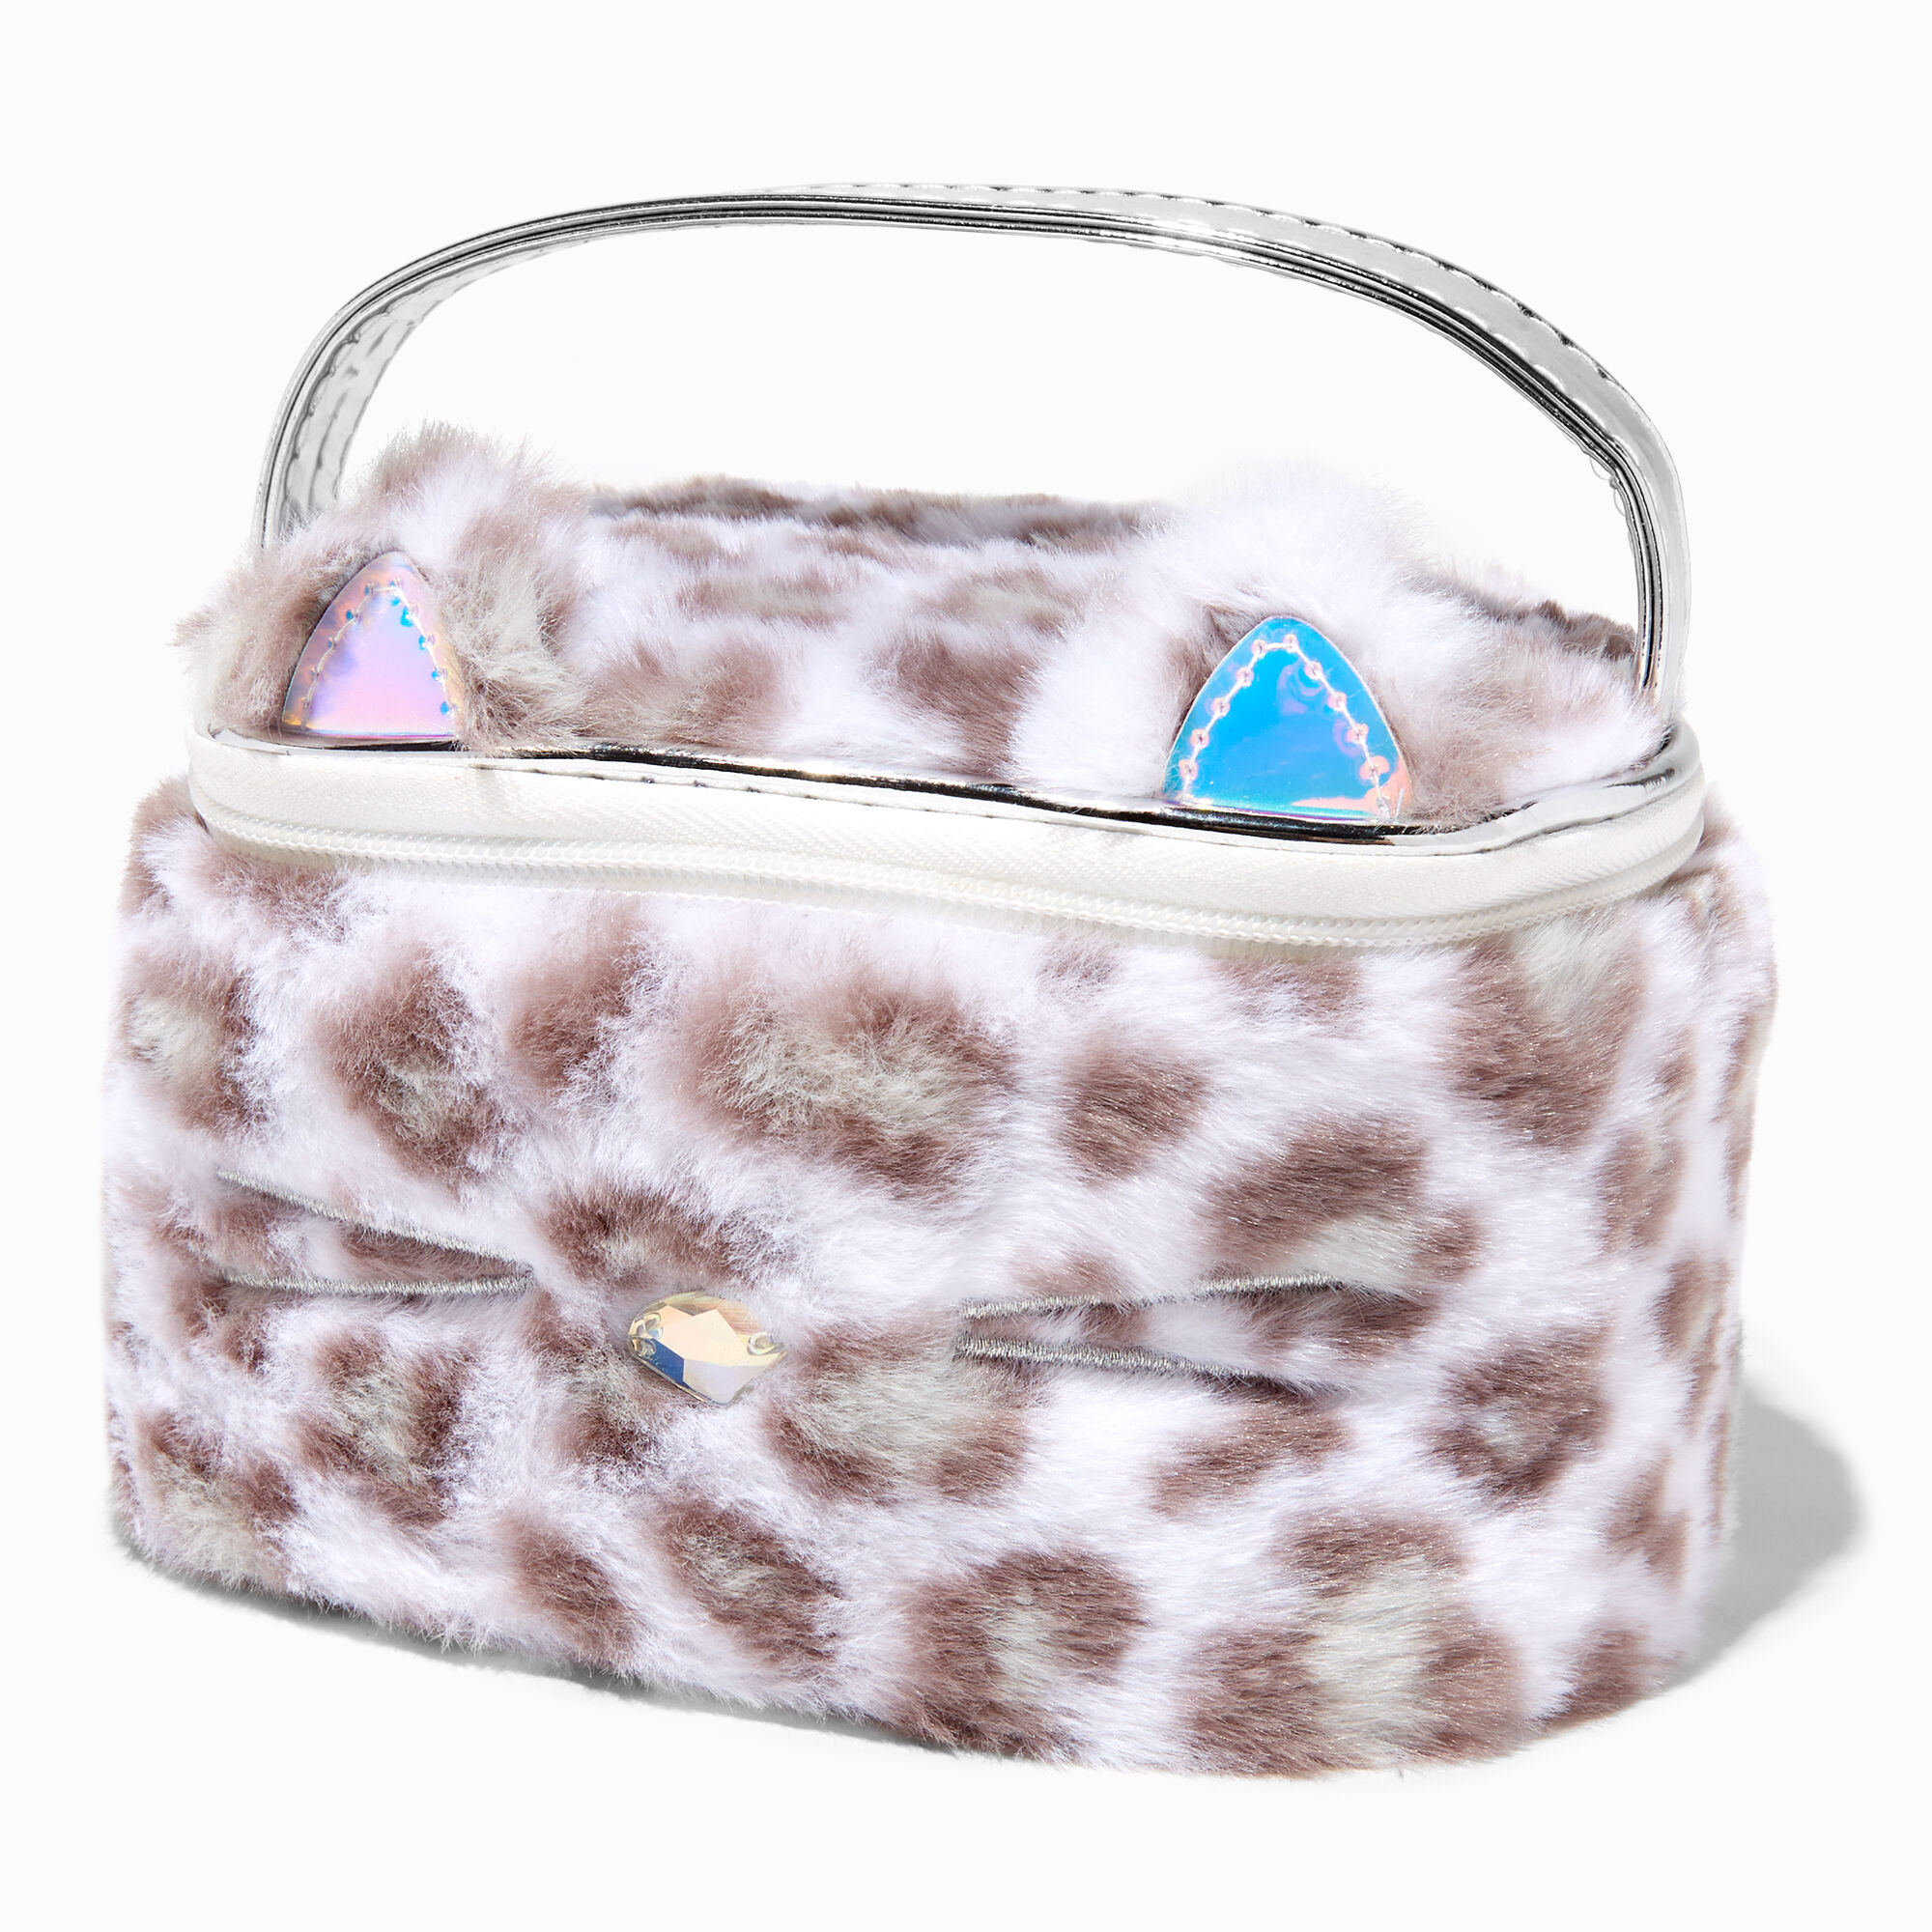 View Claires Club Furry Snow Leopard Makeup Bag information